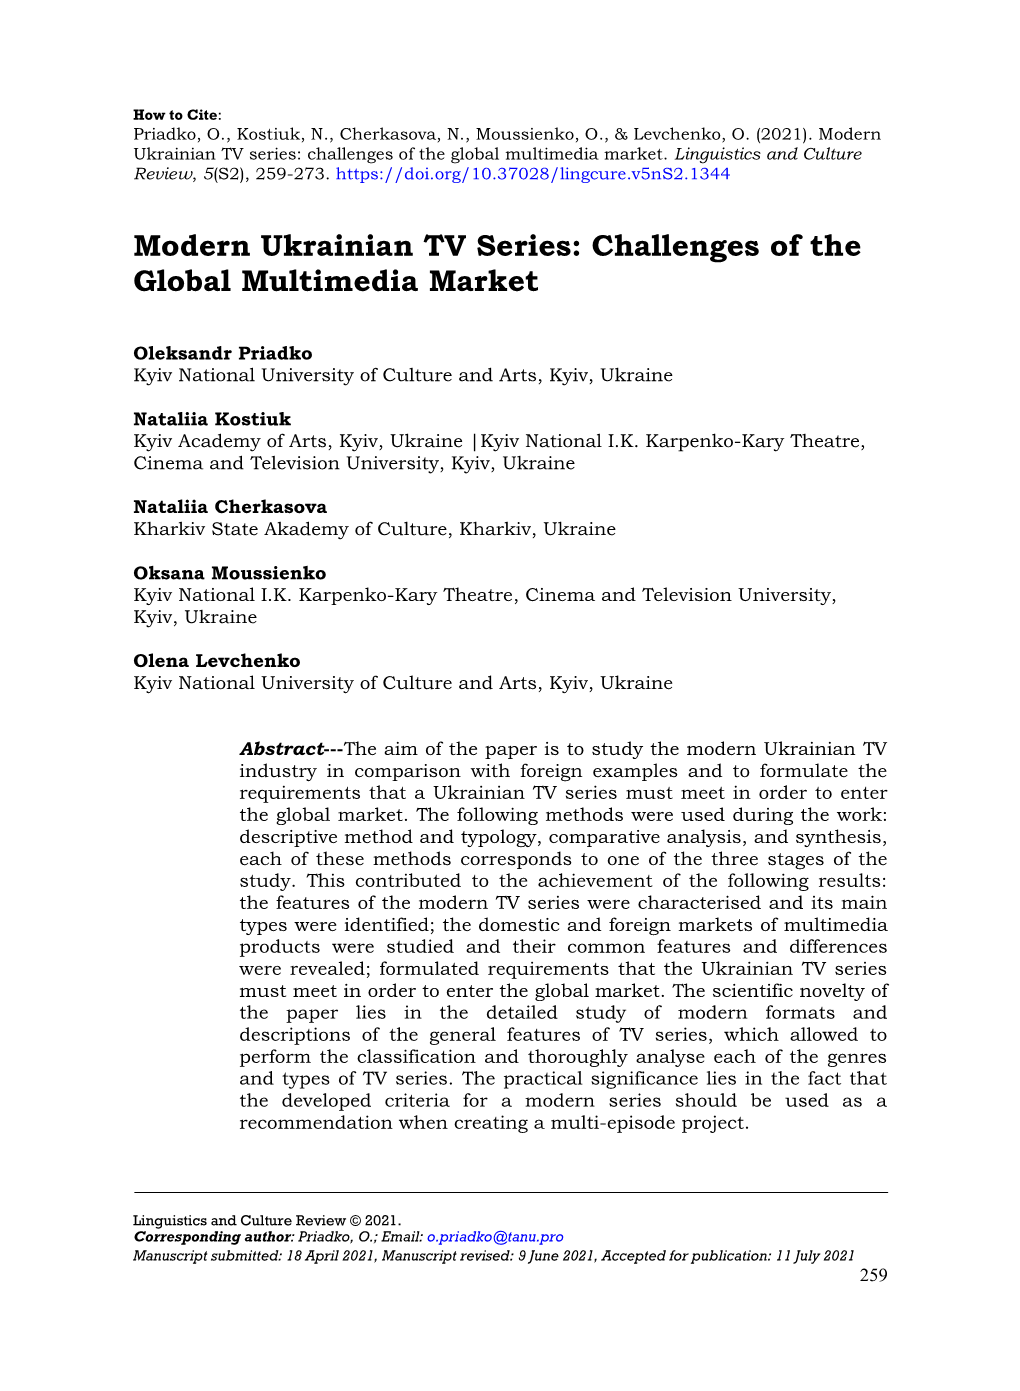 Modern Ukrainian TV Series: Challenges of the Global Multimedia Market